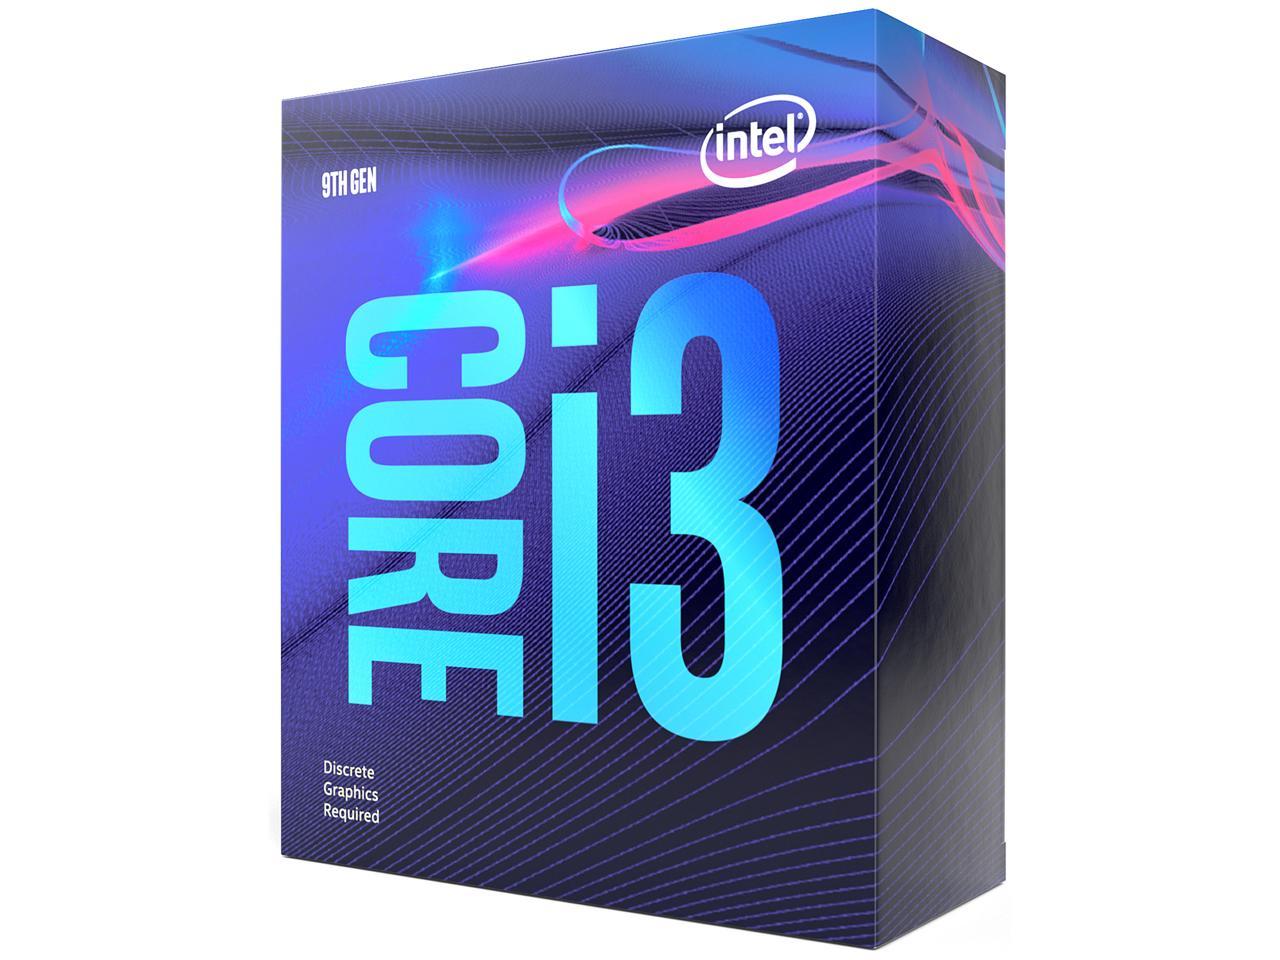 Intel Core i3 9th Gen - Core i3-9100F Coffee Lake 4-Core 3.6 GHz (4.2 GHz  Turbo) LGA 1151 (300 Series) 65W BX80684i39100F Desktop Processor Without  